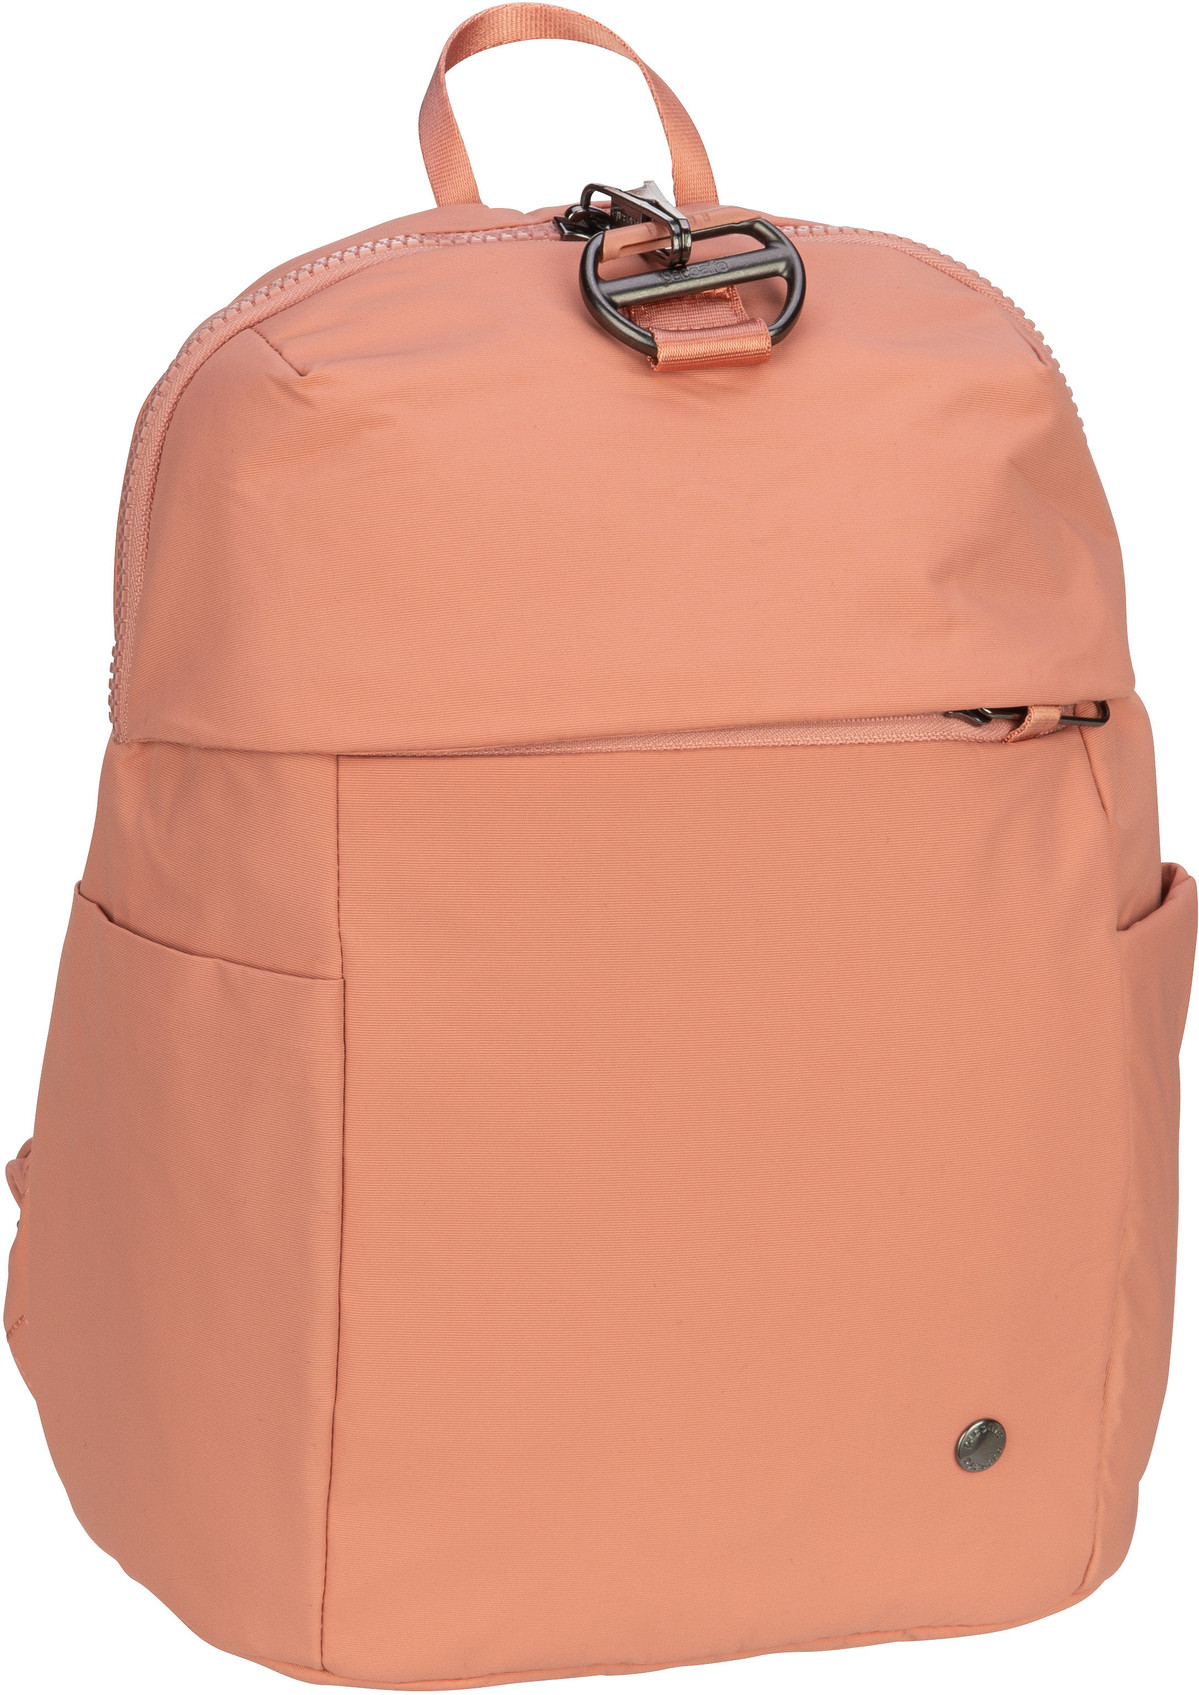 Pacsafe Pacsafe Citysafe CX Backpack Petite in Rosé (8 Liter), Rucksack / Backpack